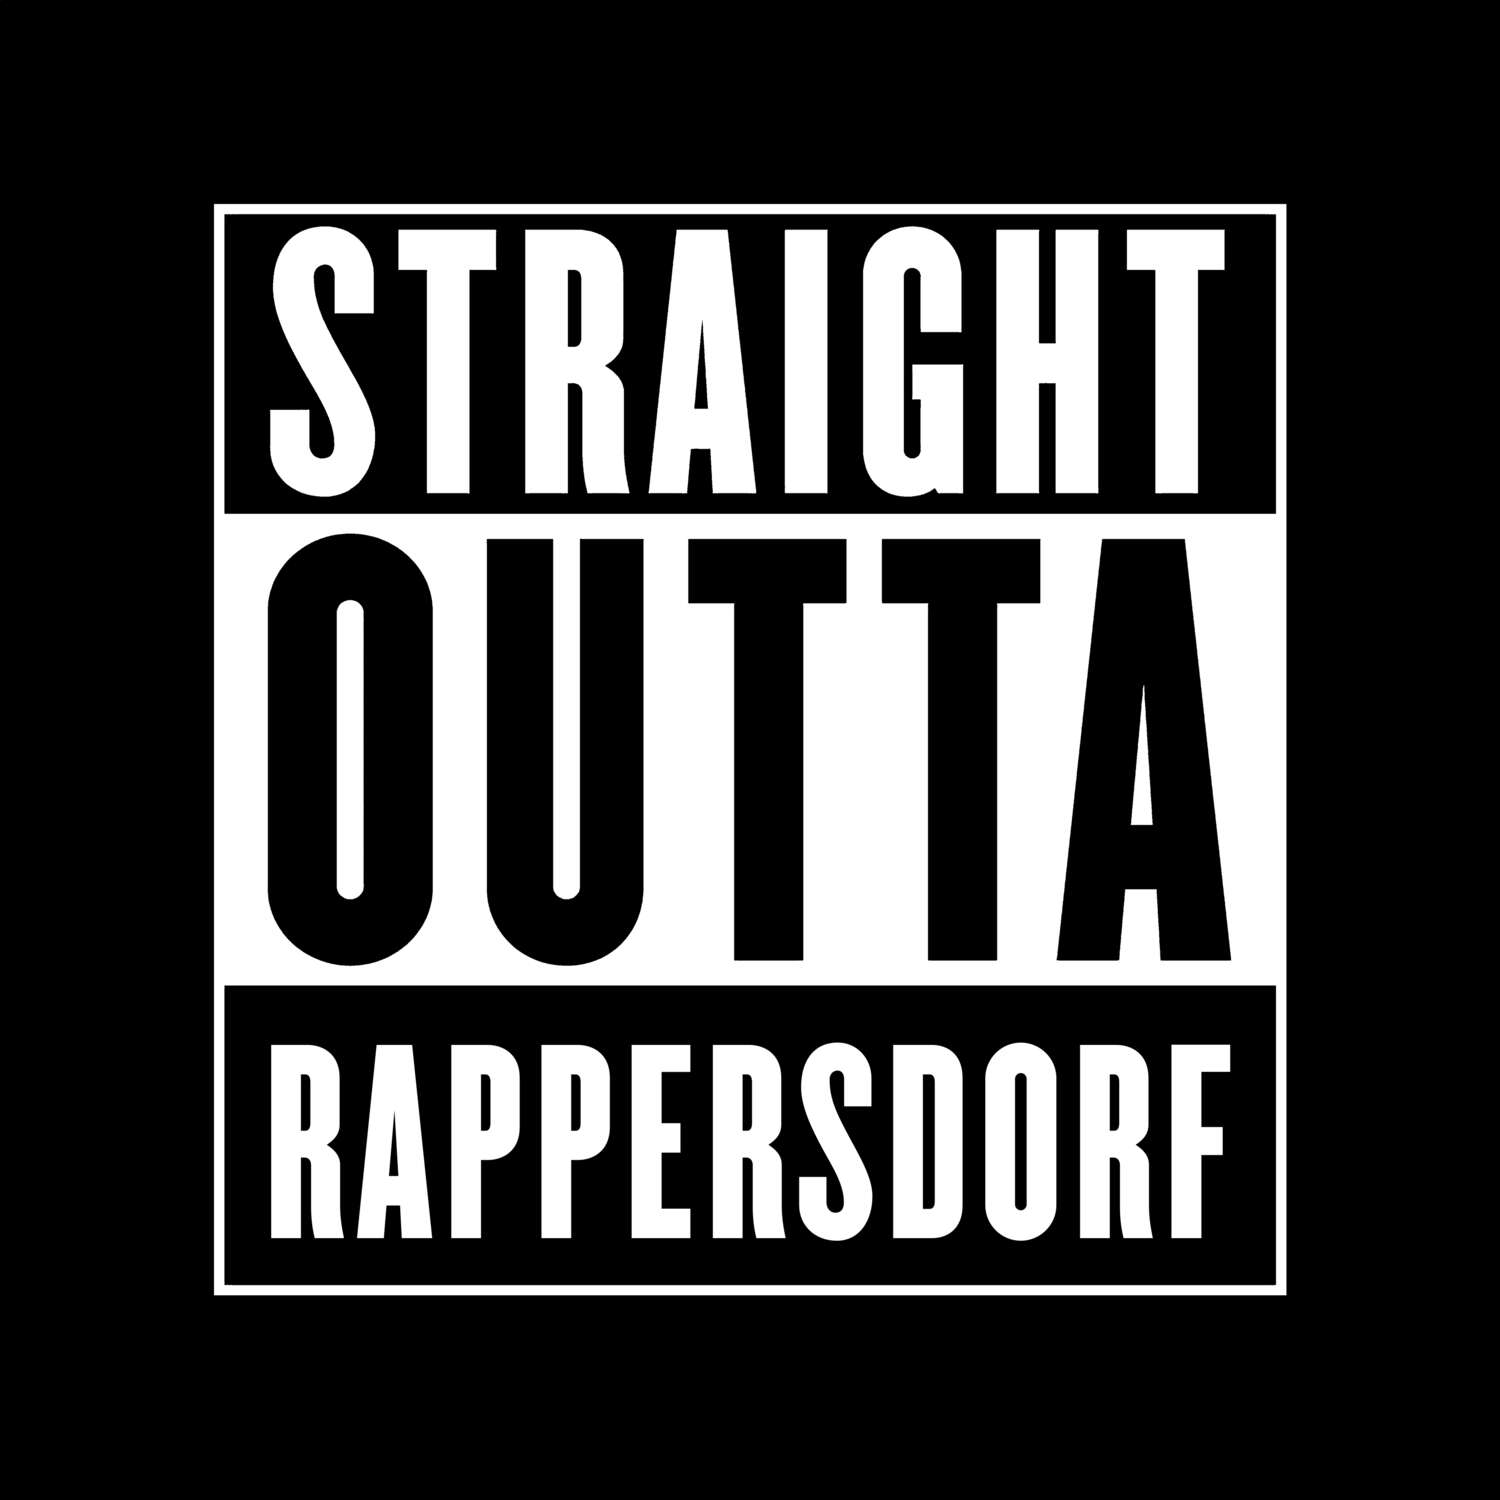 Rappersdorf T-Shirt »Straight Outta«